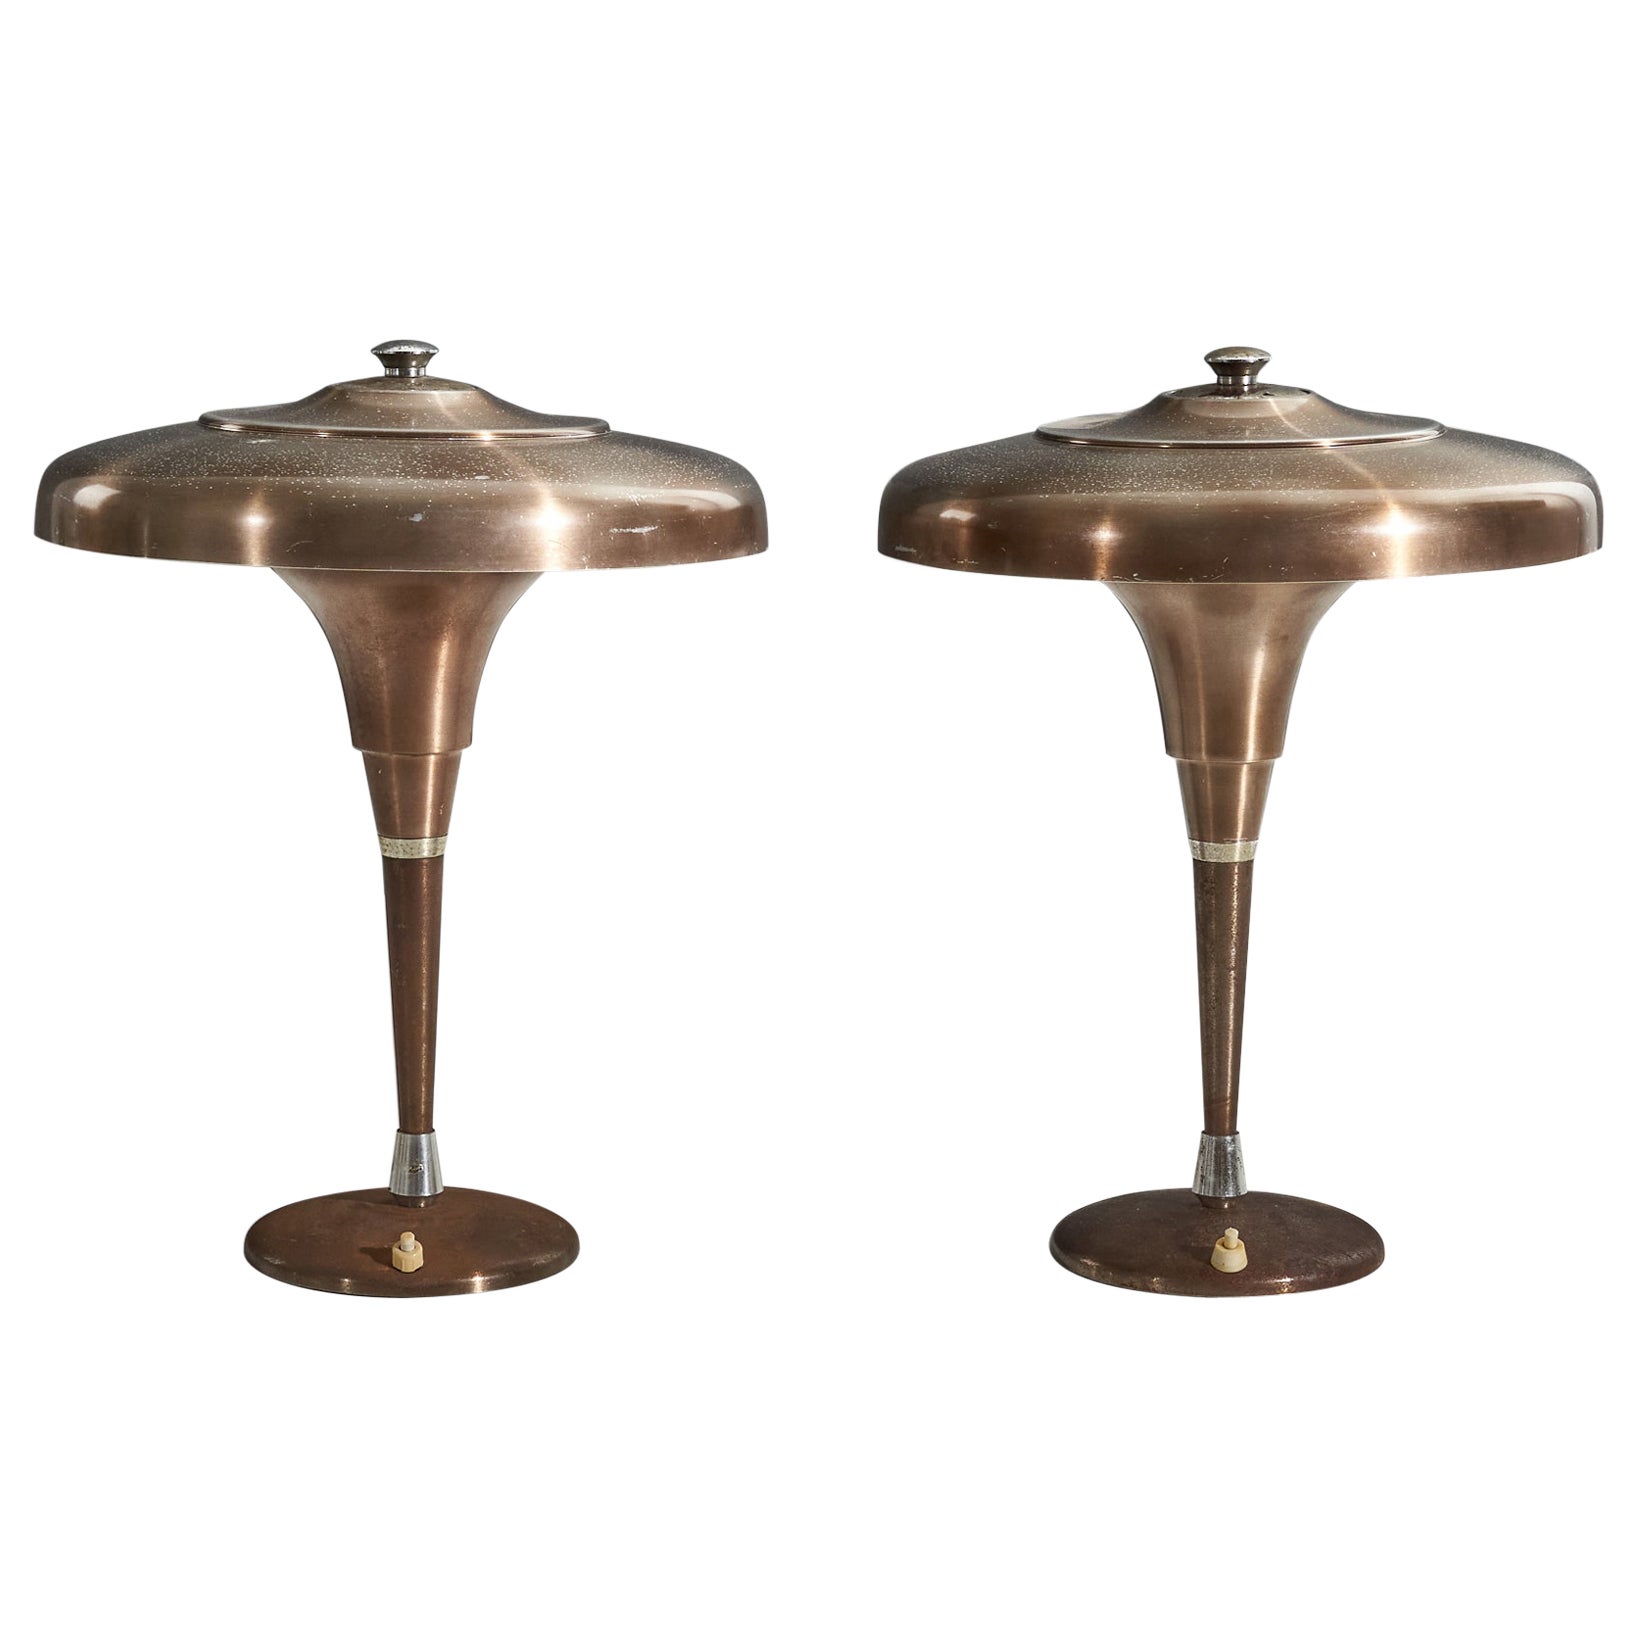 Italian Designer, Table Lamps, Brass, Italy, 1940s